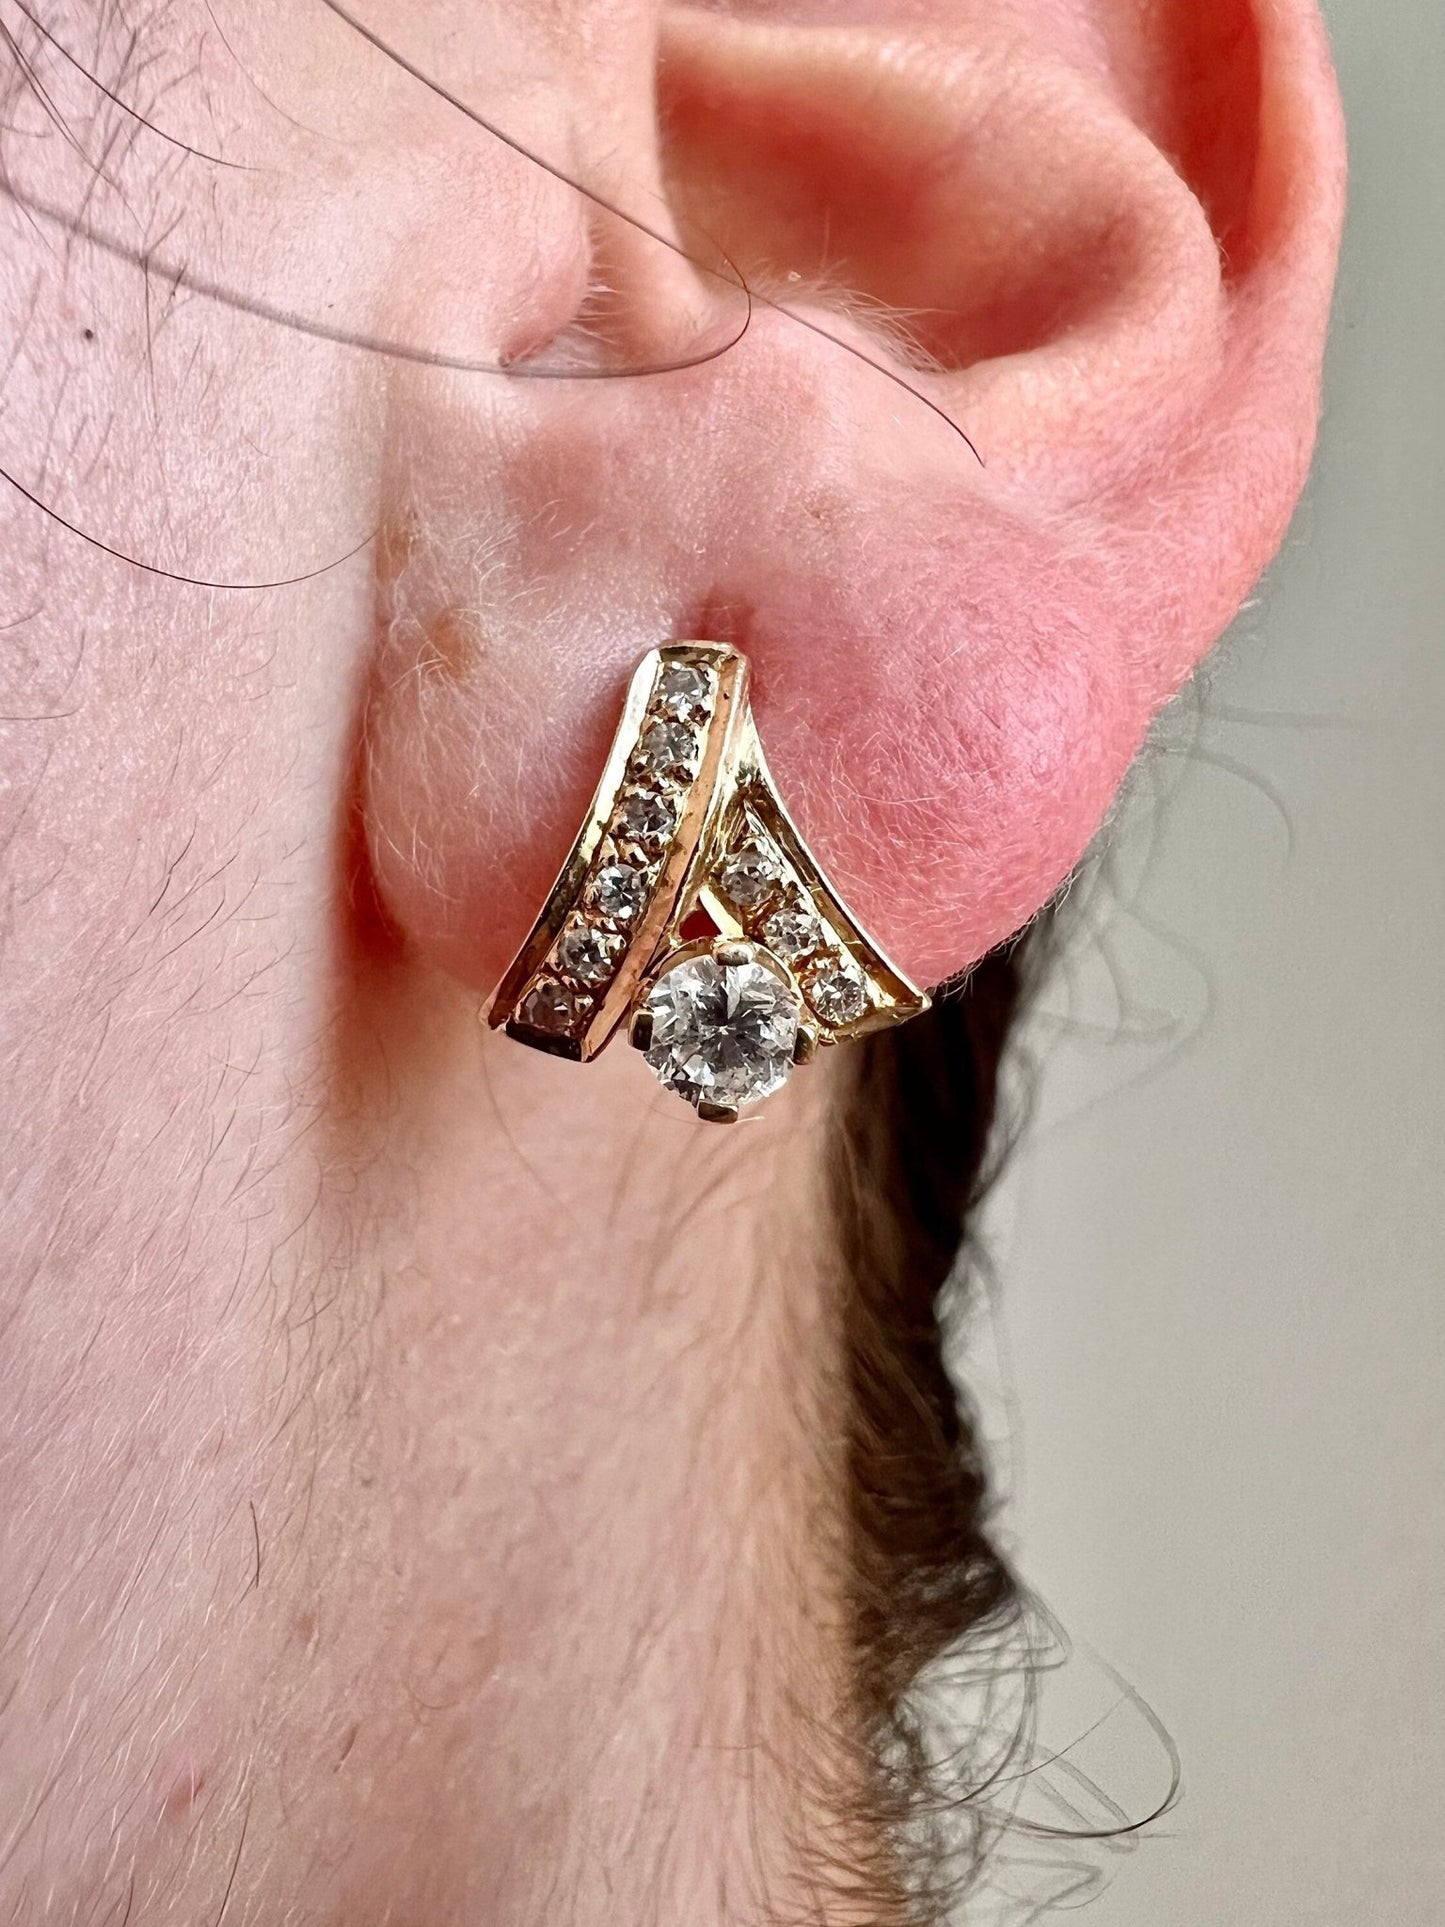 Vintage 14K Diamond Crossover Earrings - Yellow Gold Earrings - Stud Earrings - Drop Earrings - Birthday Gift - Best Gift - Anniversary Gift